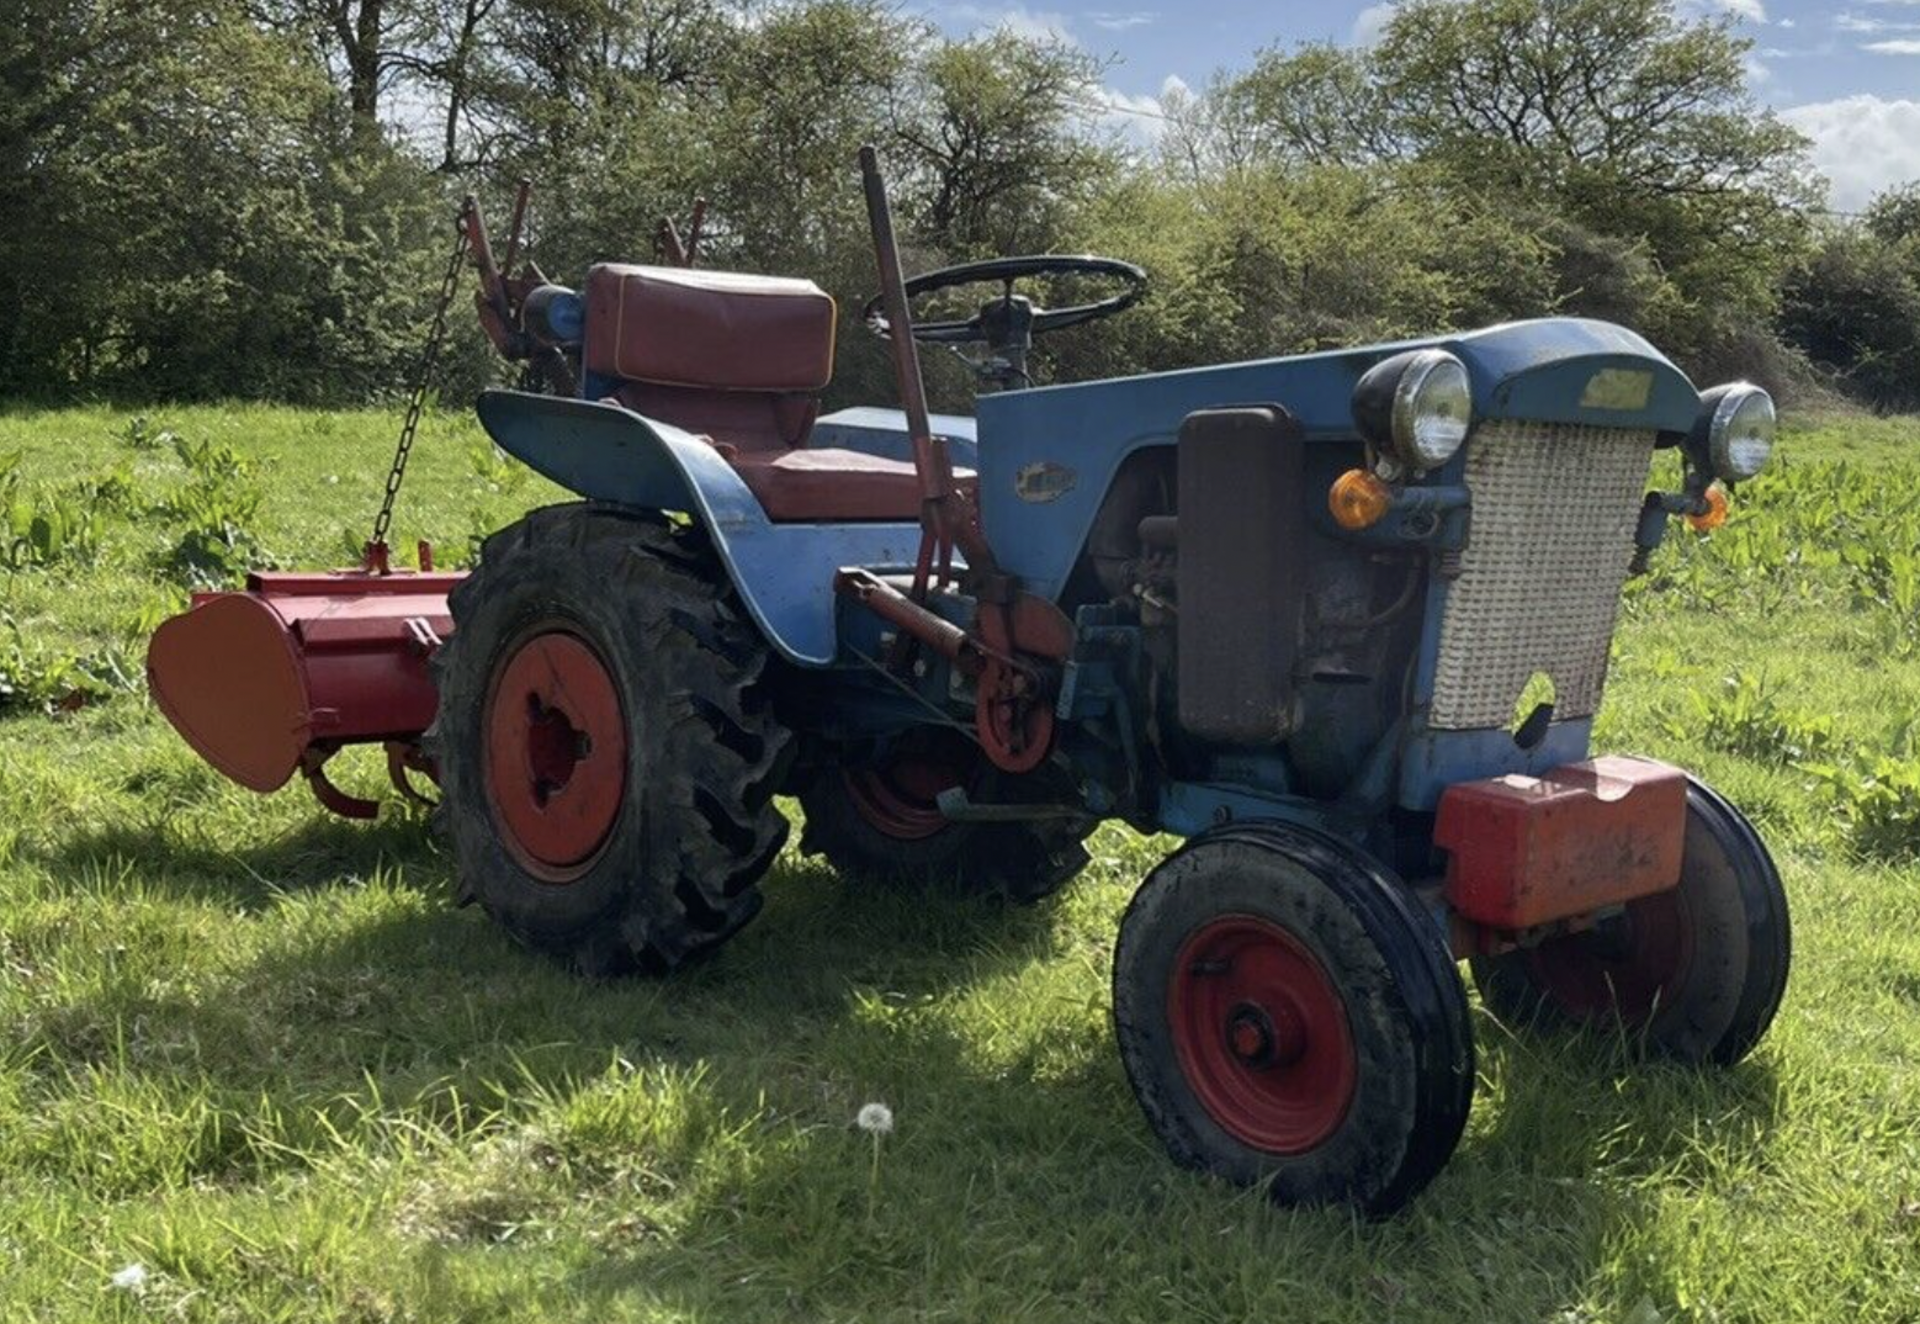 Gutbrod tractor and rotavator - Bild 3 aus 10